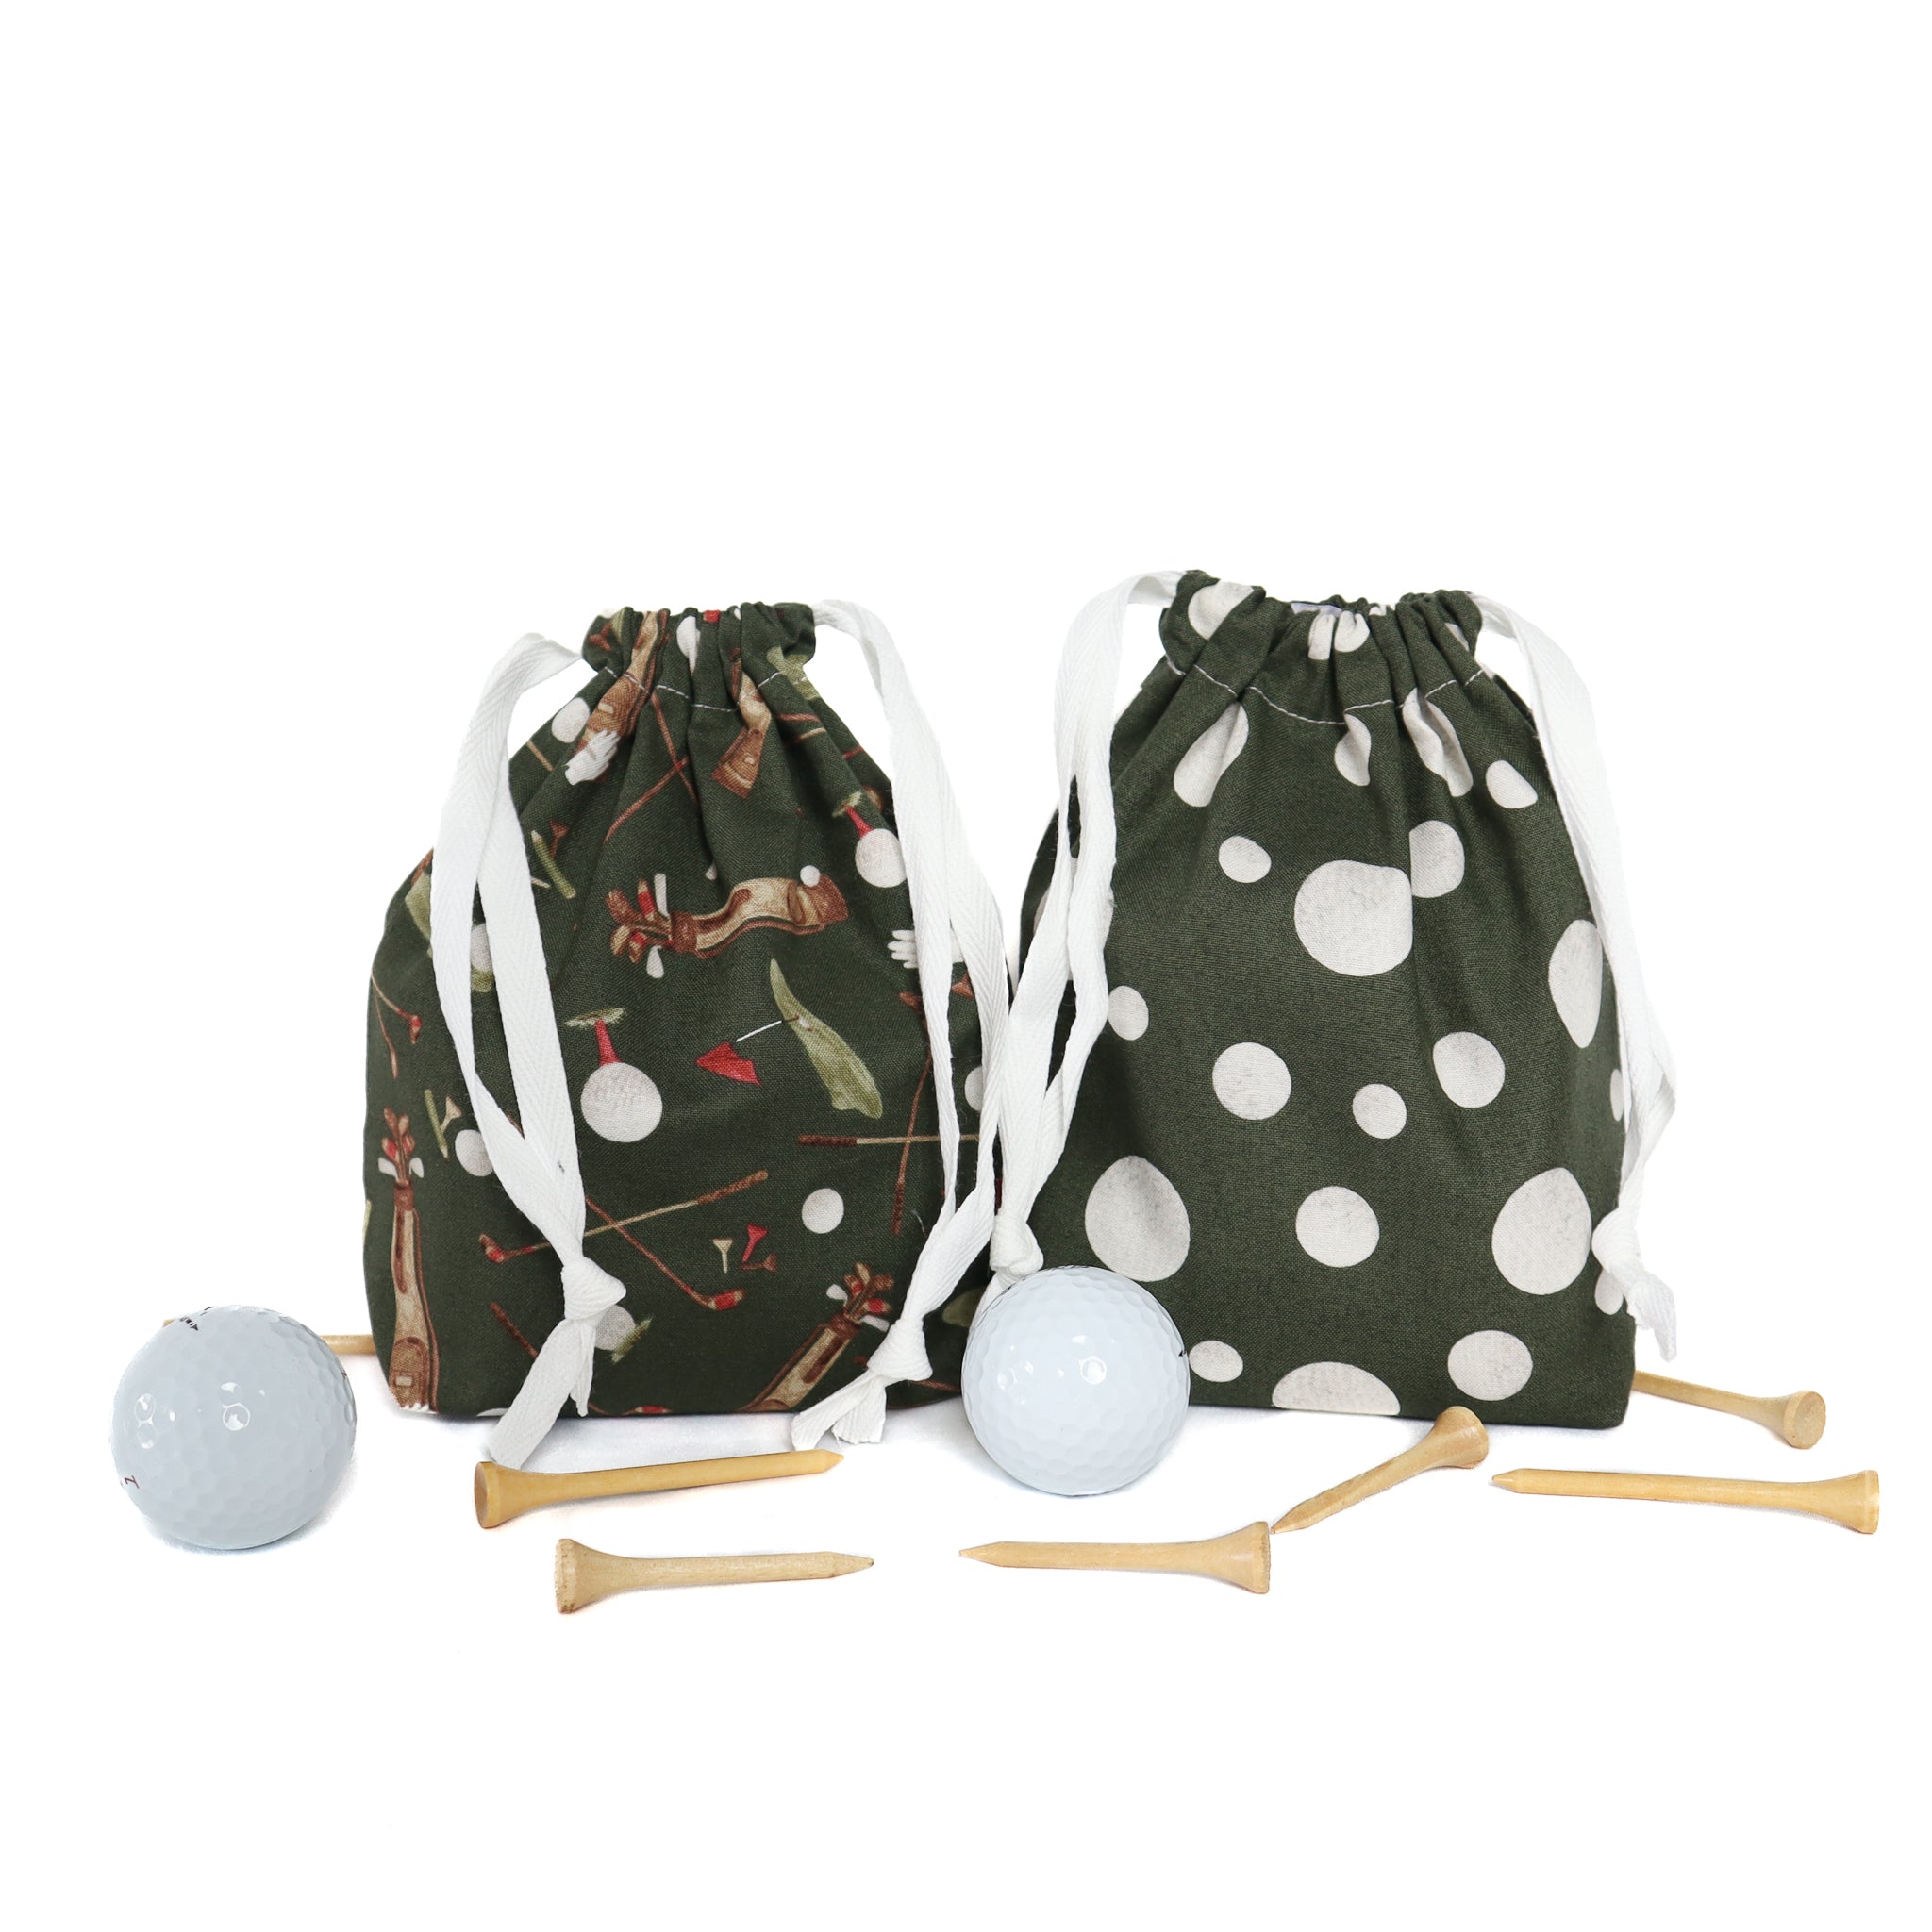 Drawstring Bag Sewing Kit - Golf Balls- Makes 2 Bags